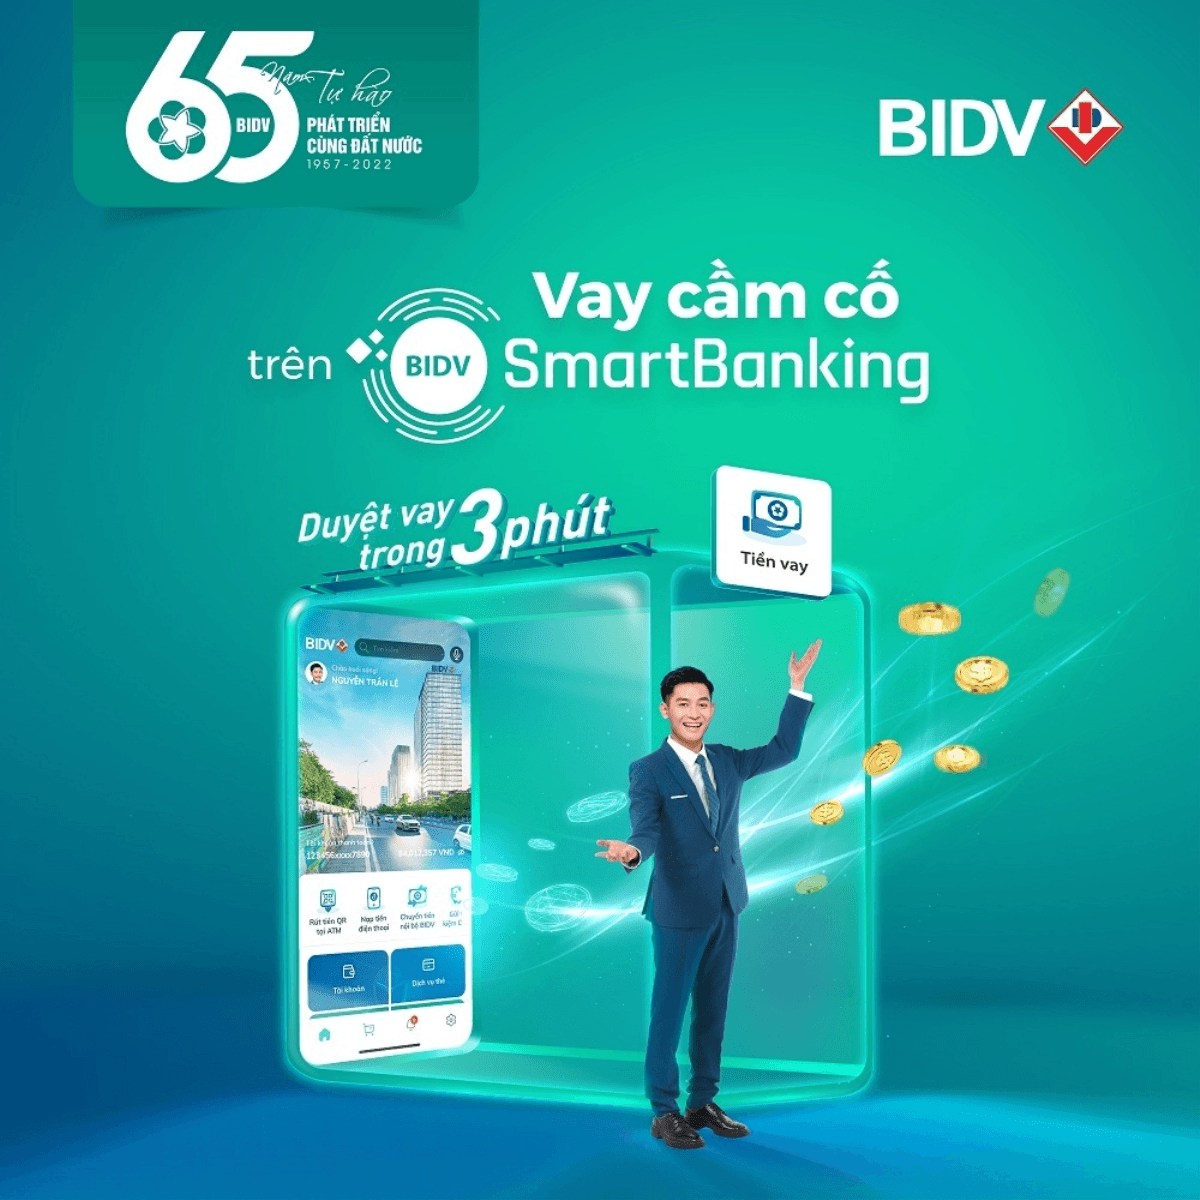 bai-01-bidv-ra-mat-tinh-nang-moi-tren-smartbanking-900x900-17050625